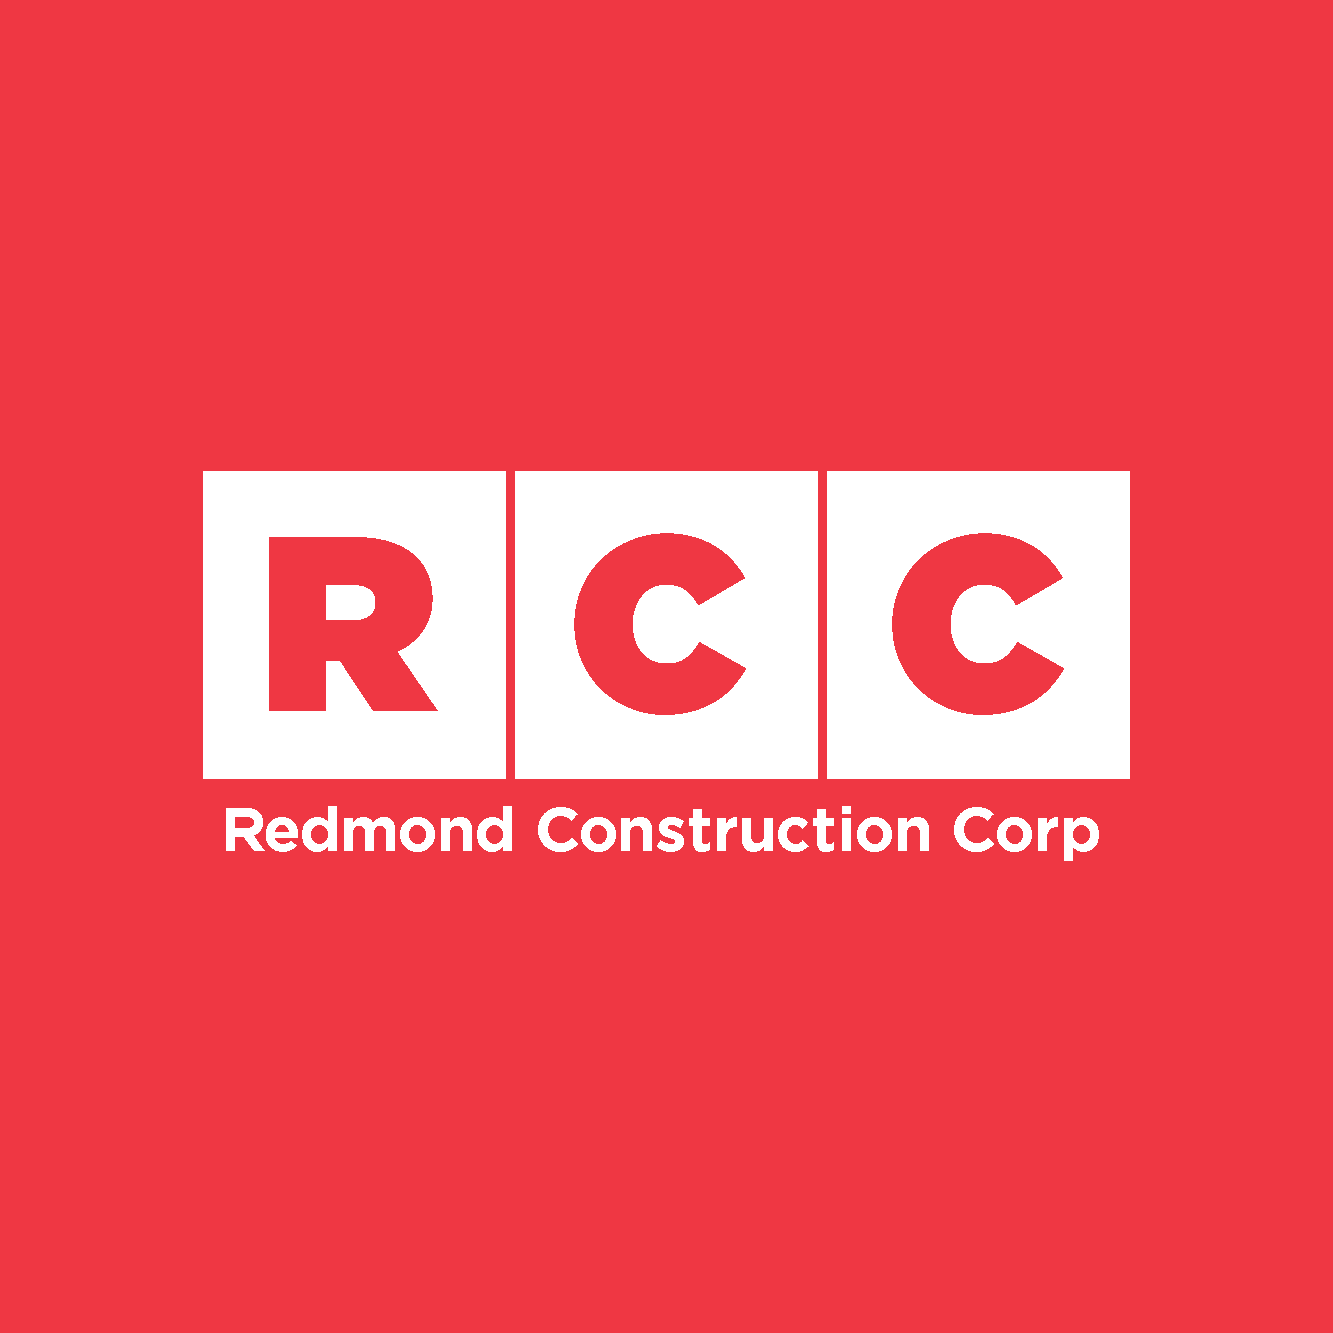 Redmond Construction Corp